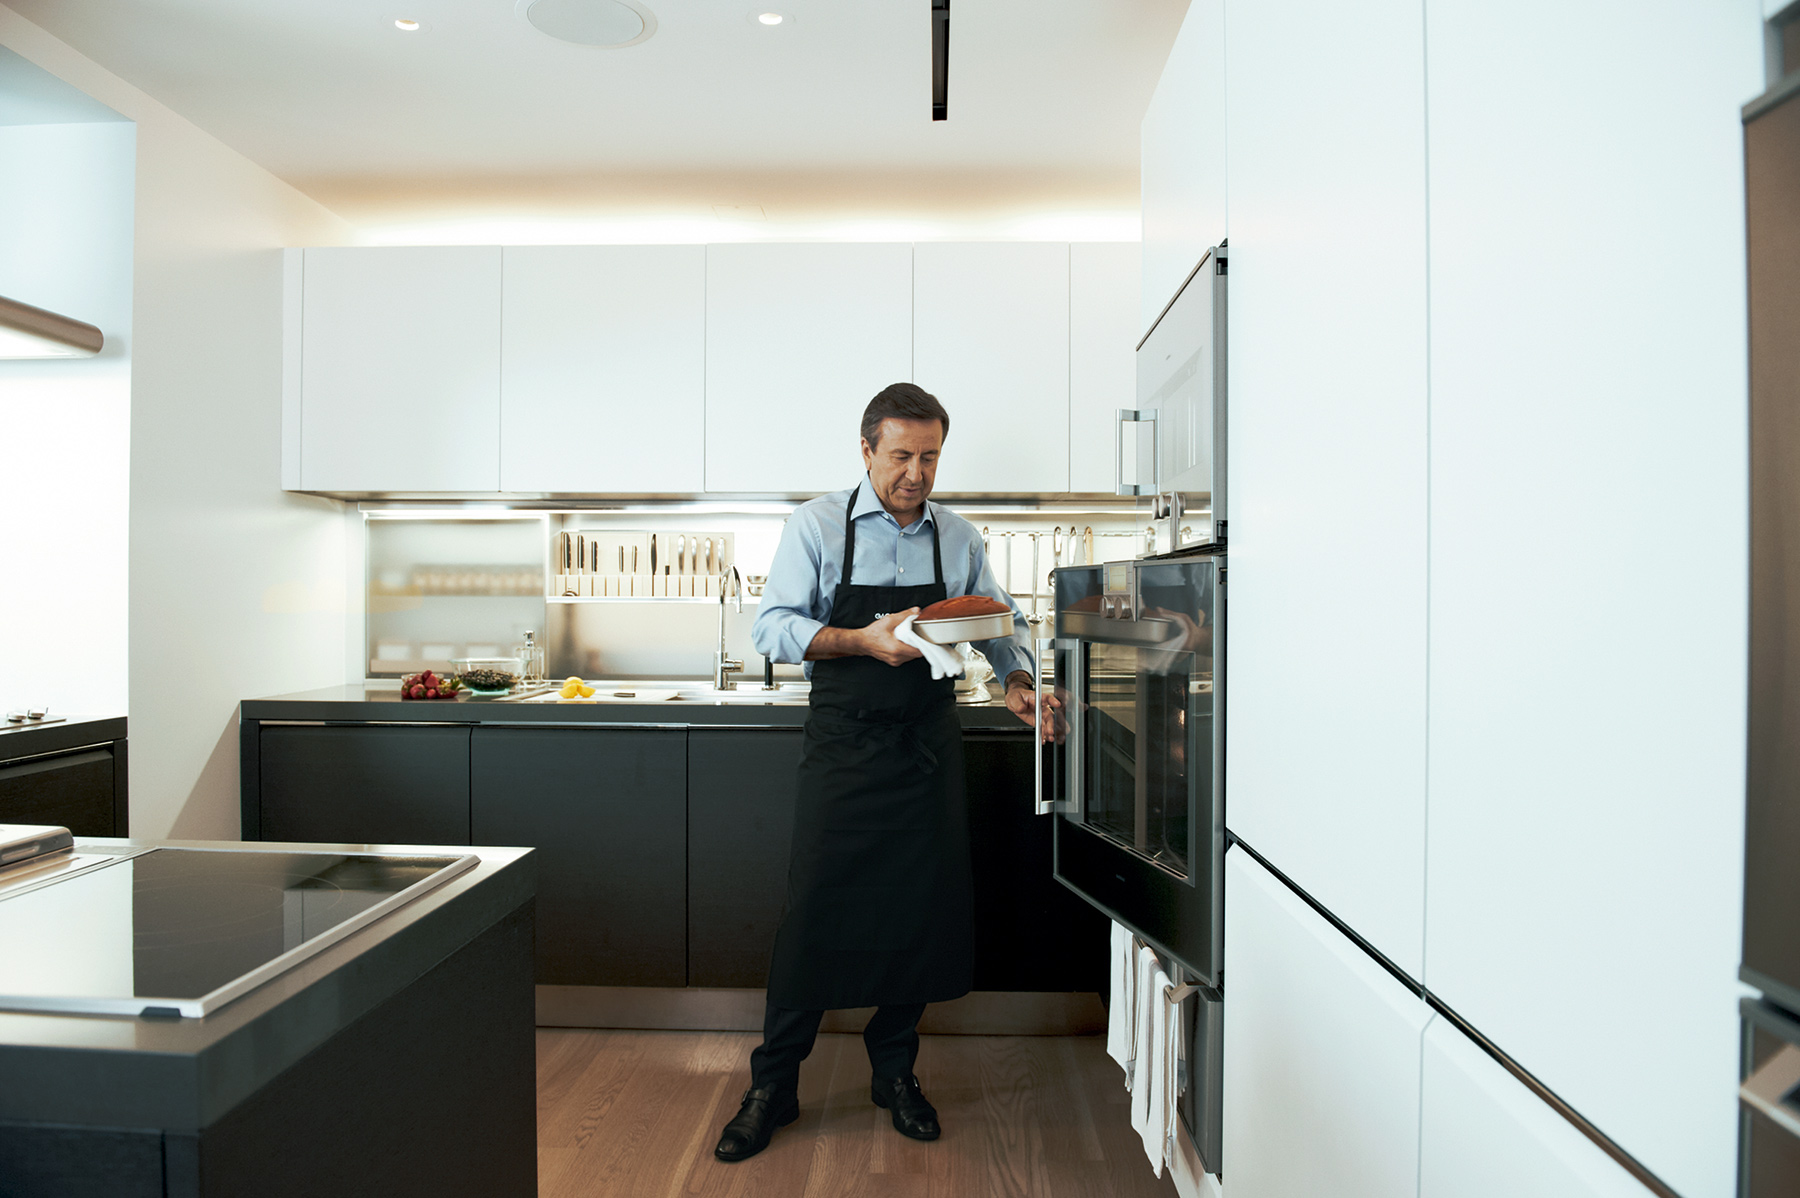 architect stephanie goto designs a home kitchen for daniel